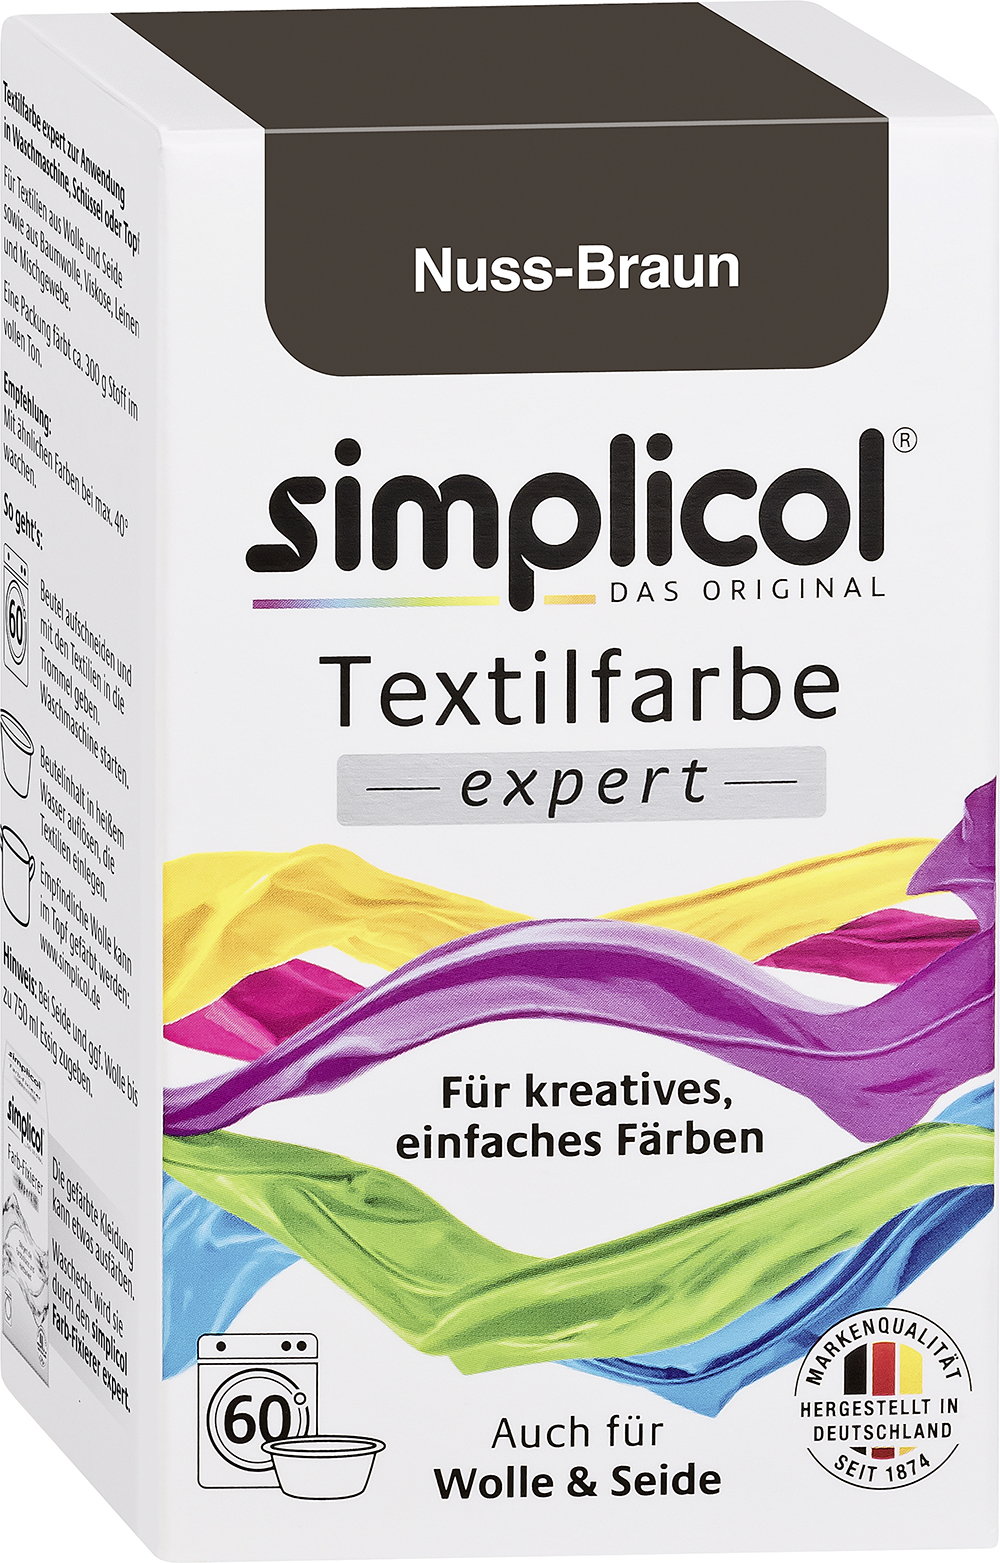 SIMPLICOL Textilfarbe Expert 150g nussbraun